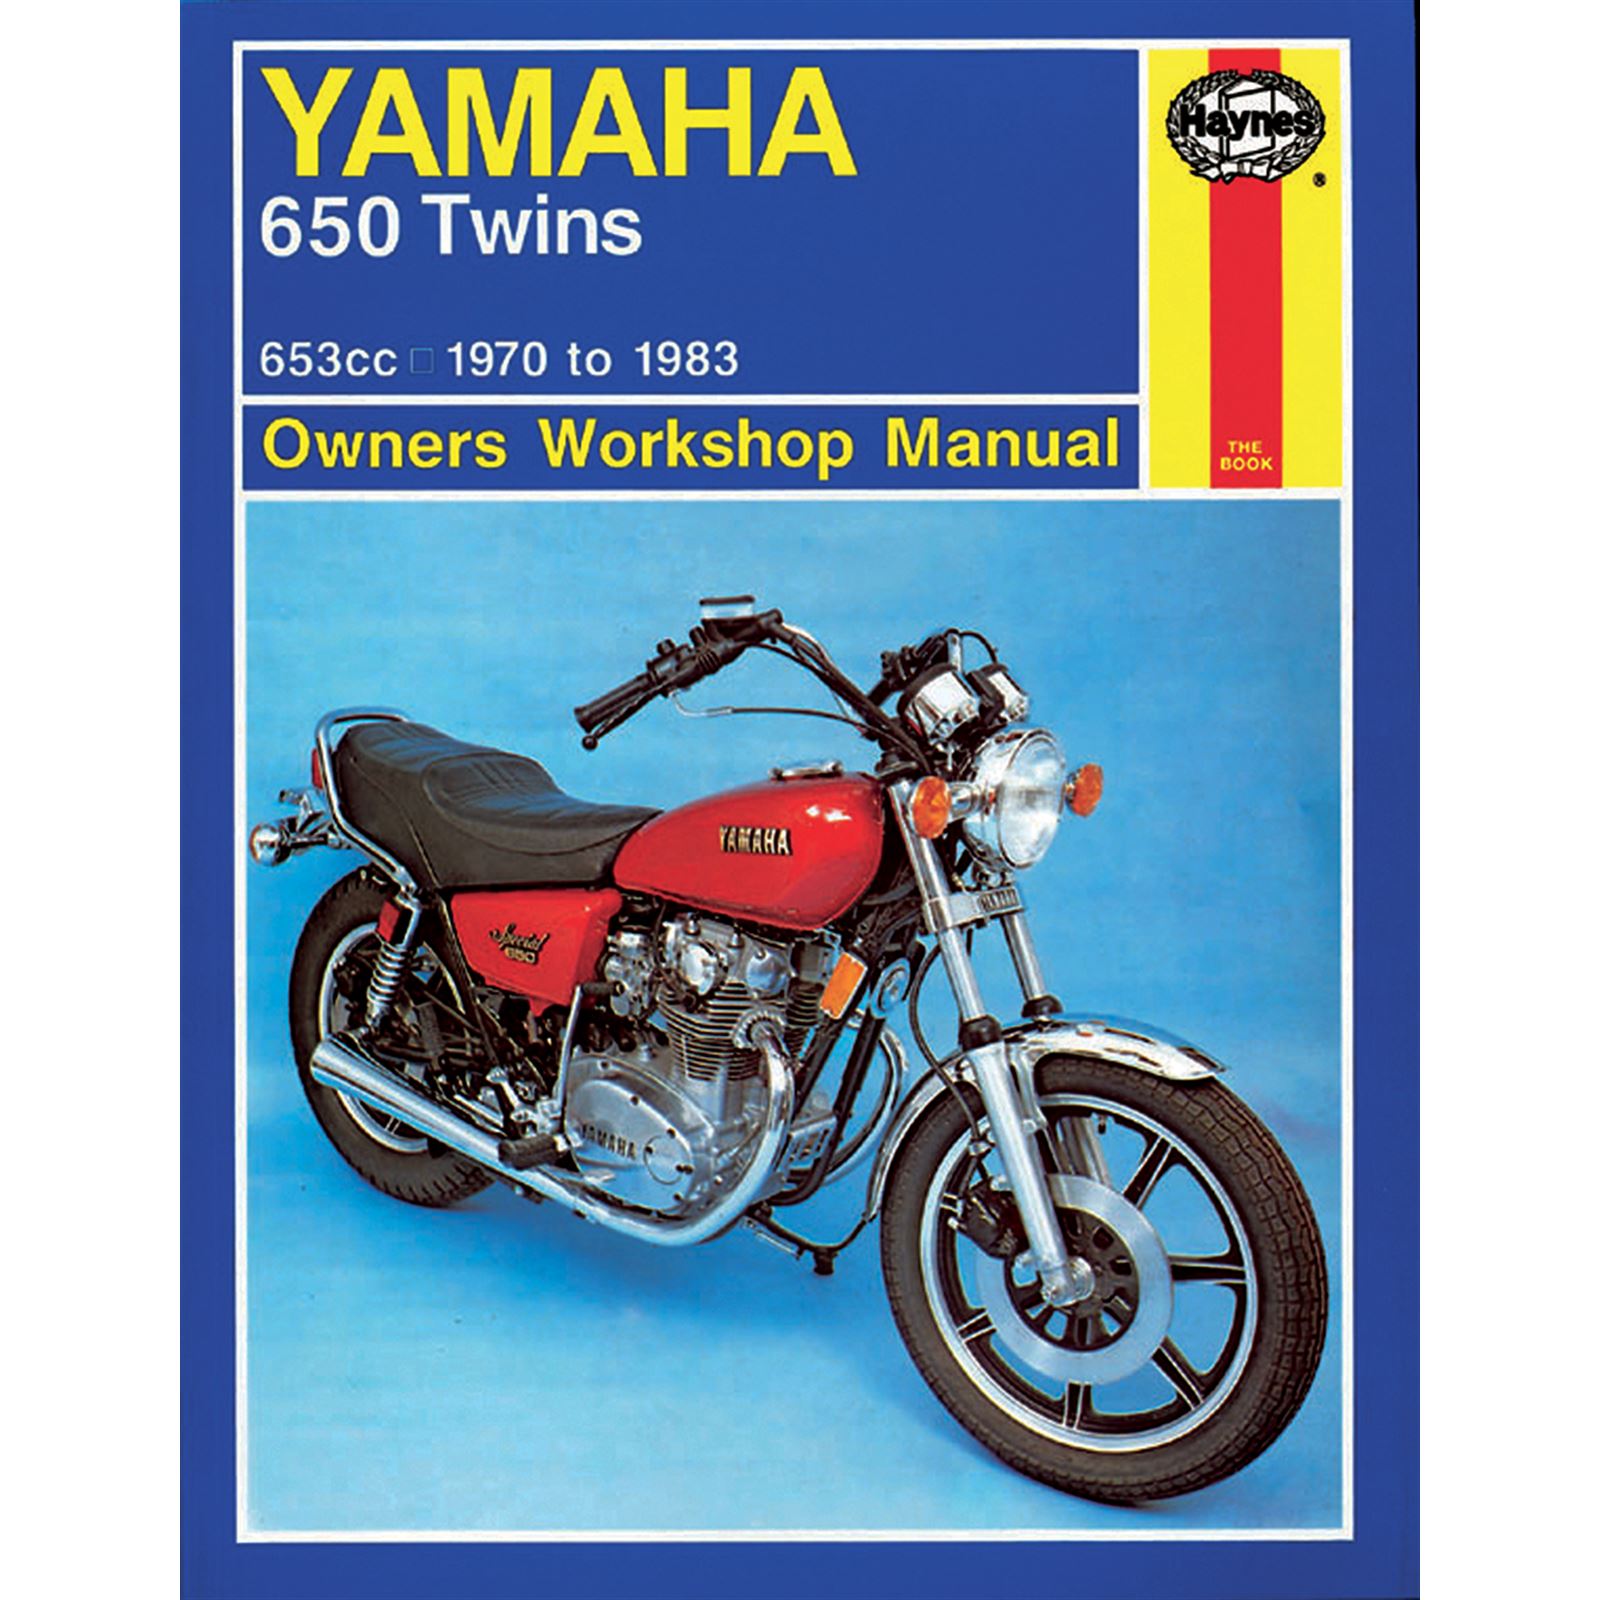 Haynes Manuals Service and Repair Manual for Yamaha XS/TX